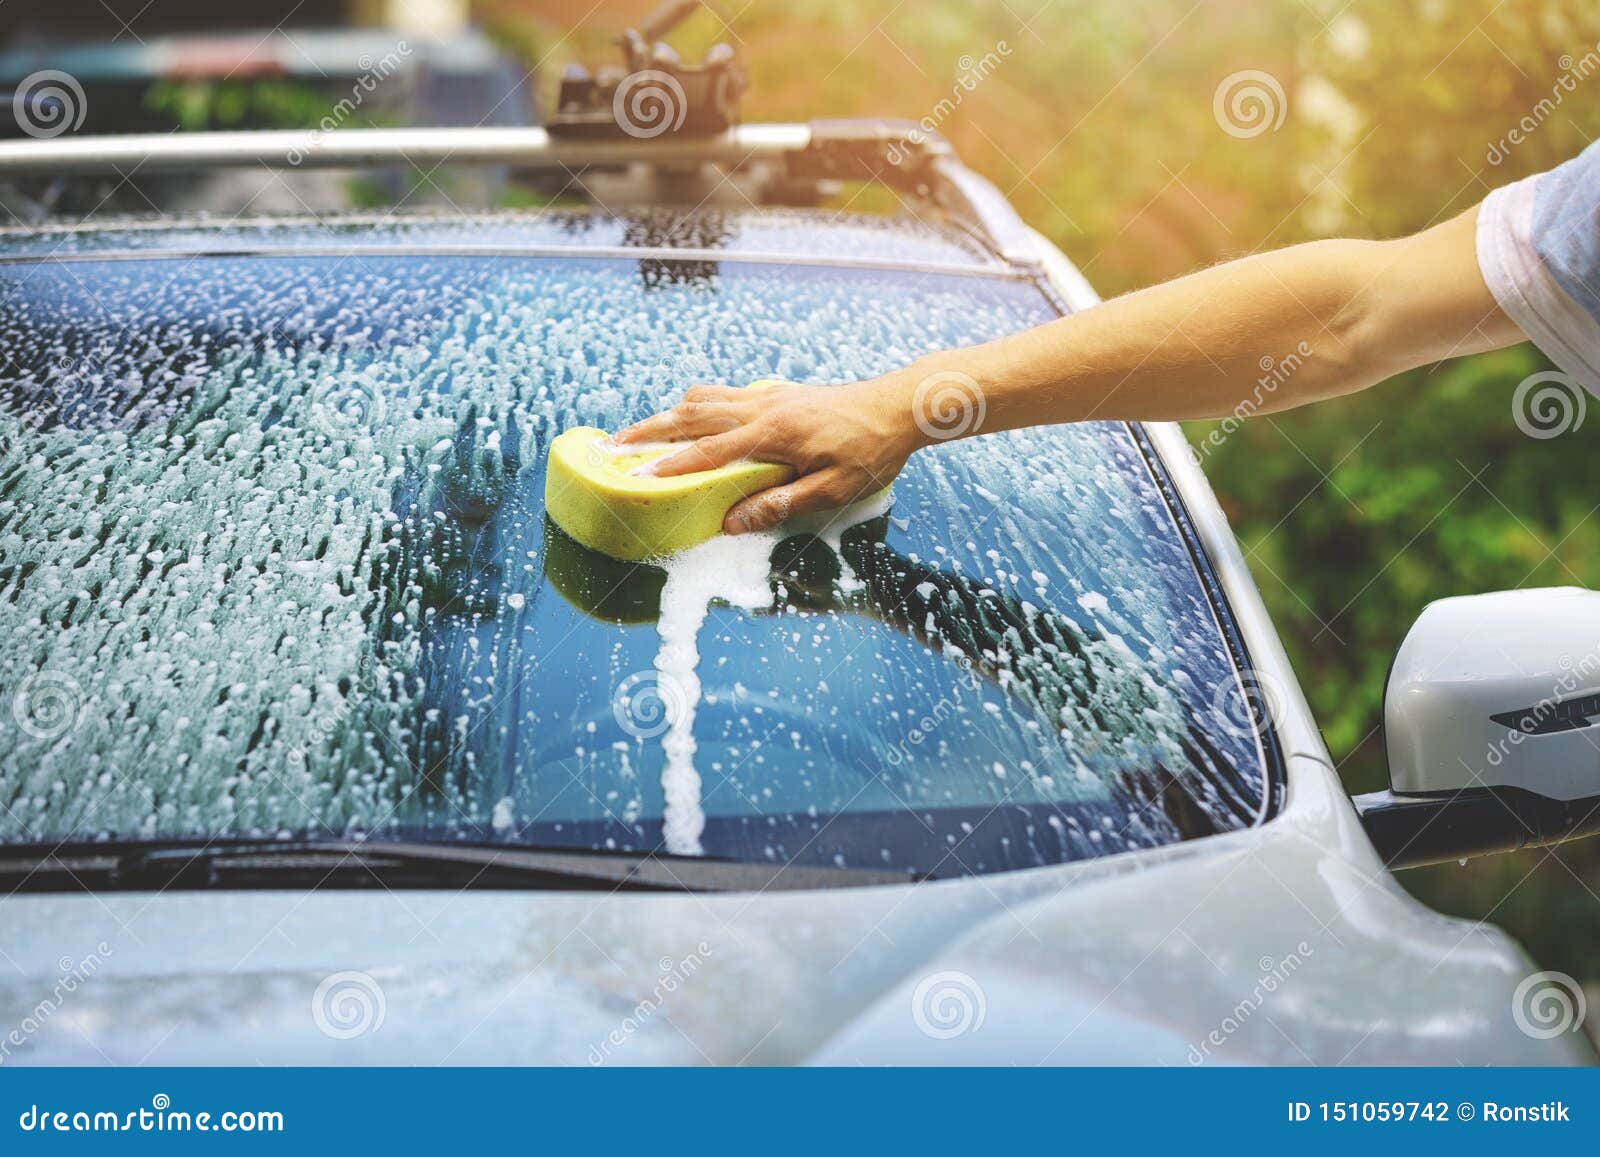 hand car wash - washing windshield with sponge